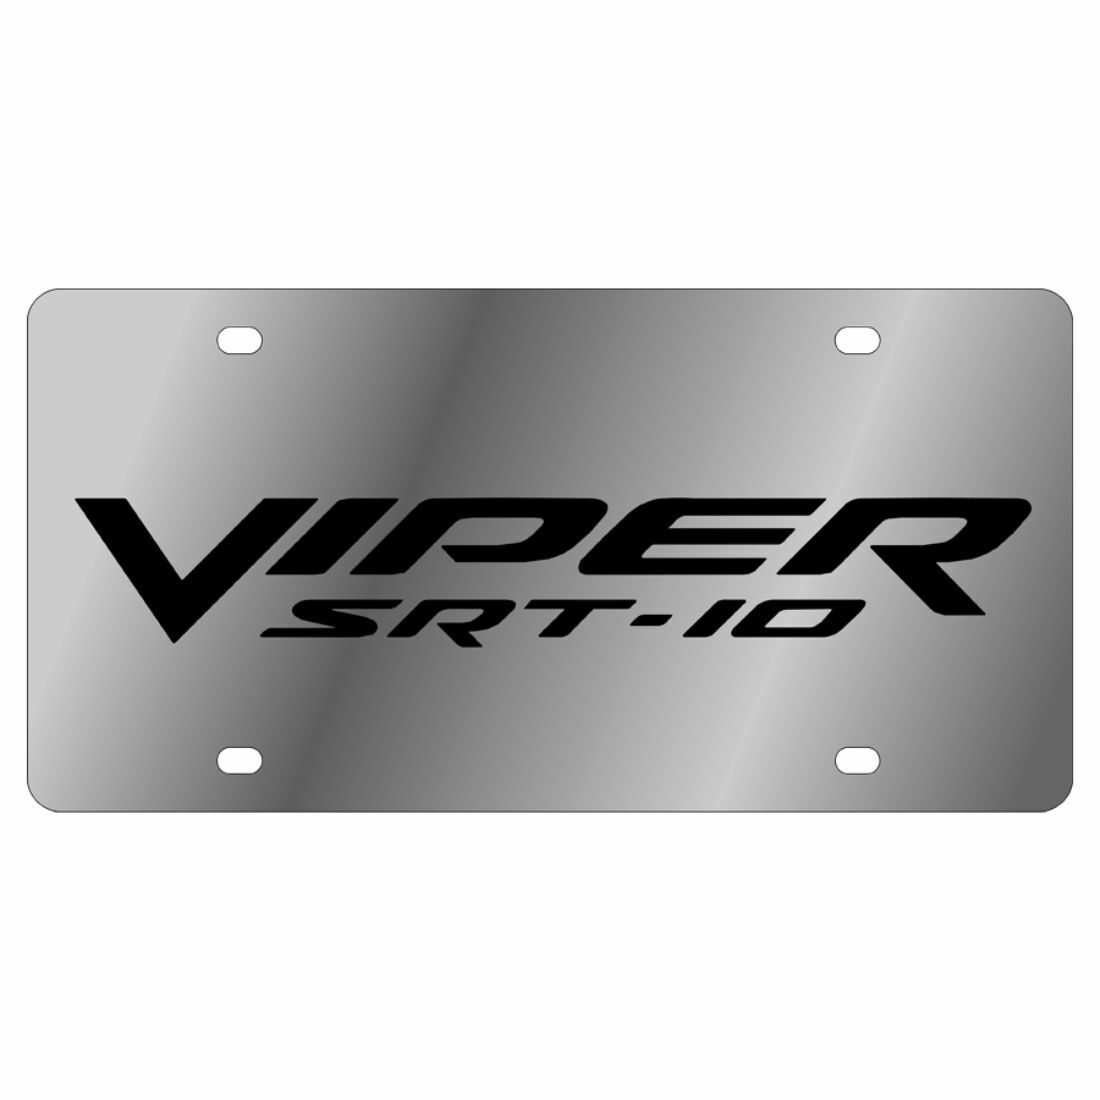 Stainless Steel Plate Viper SRT10 Black License Plate Frame 3D Novelty Tag